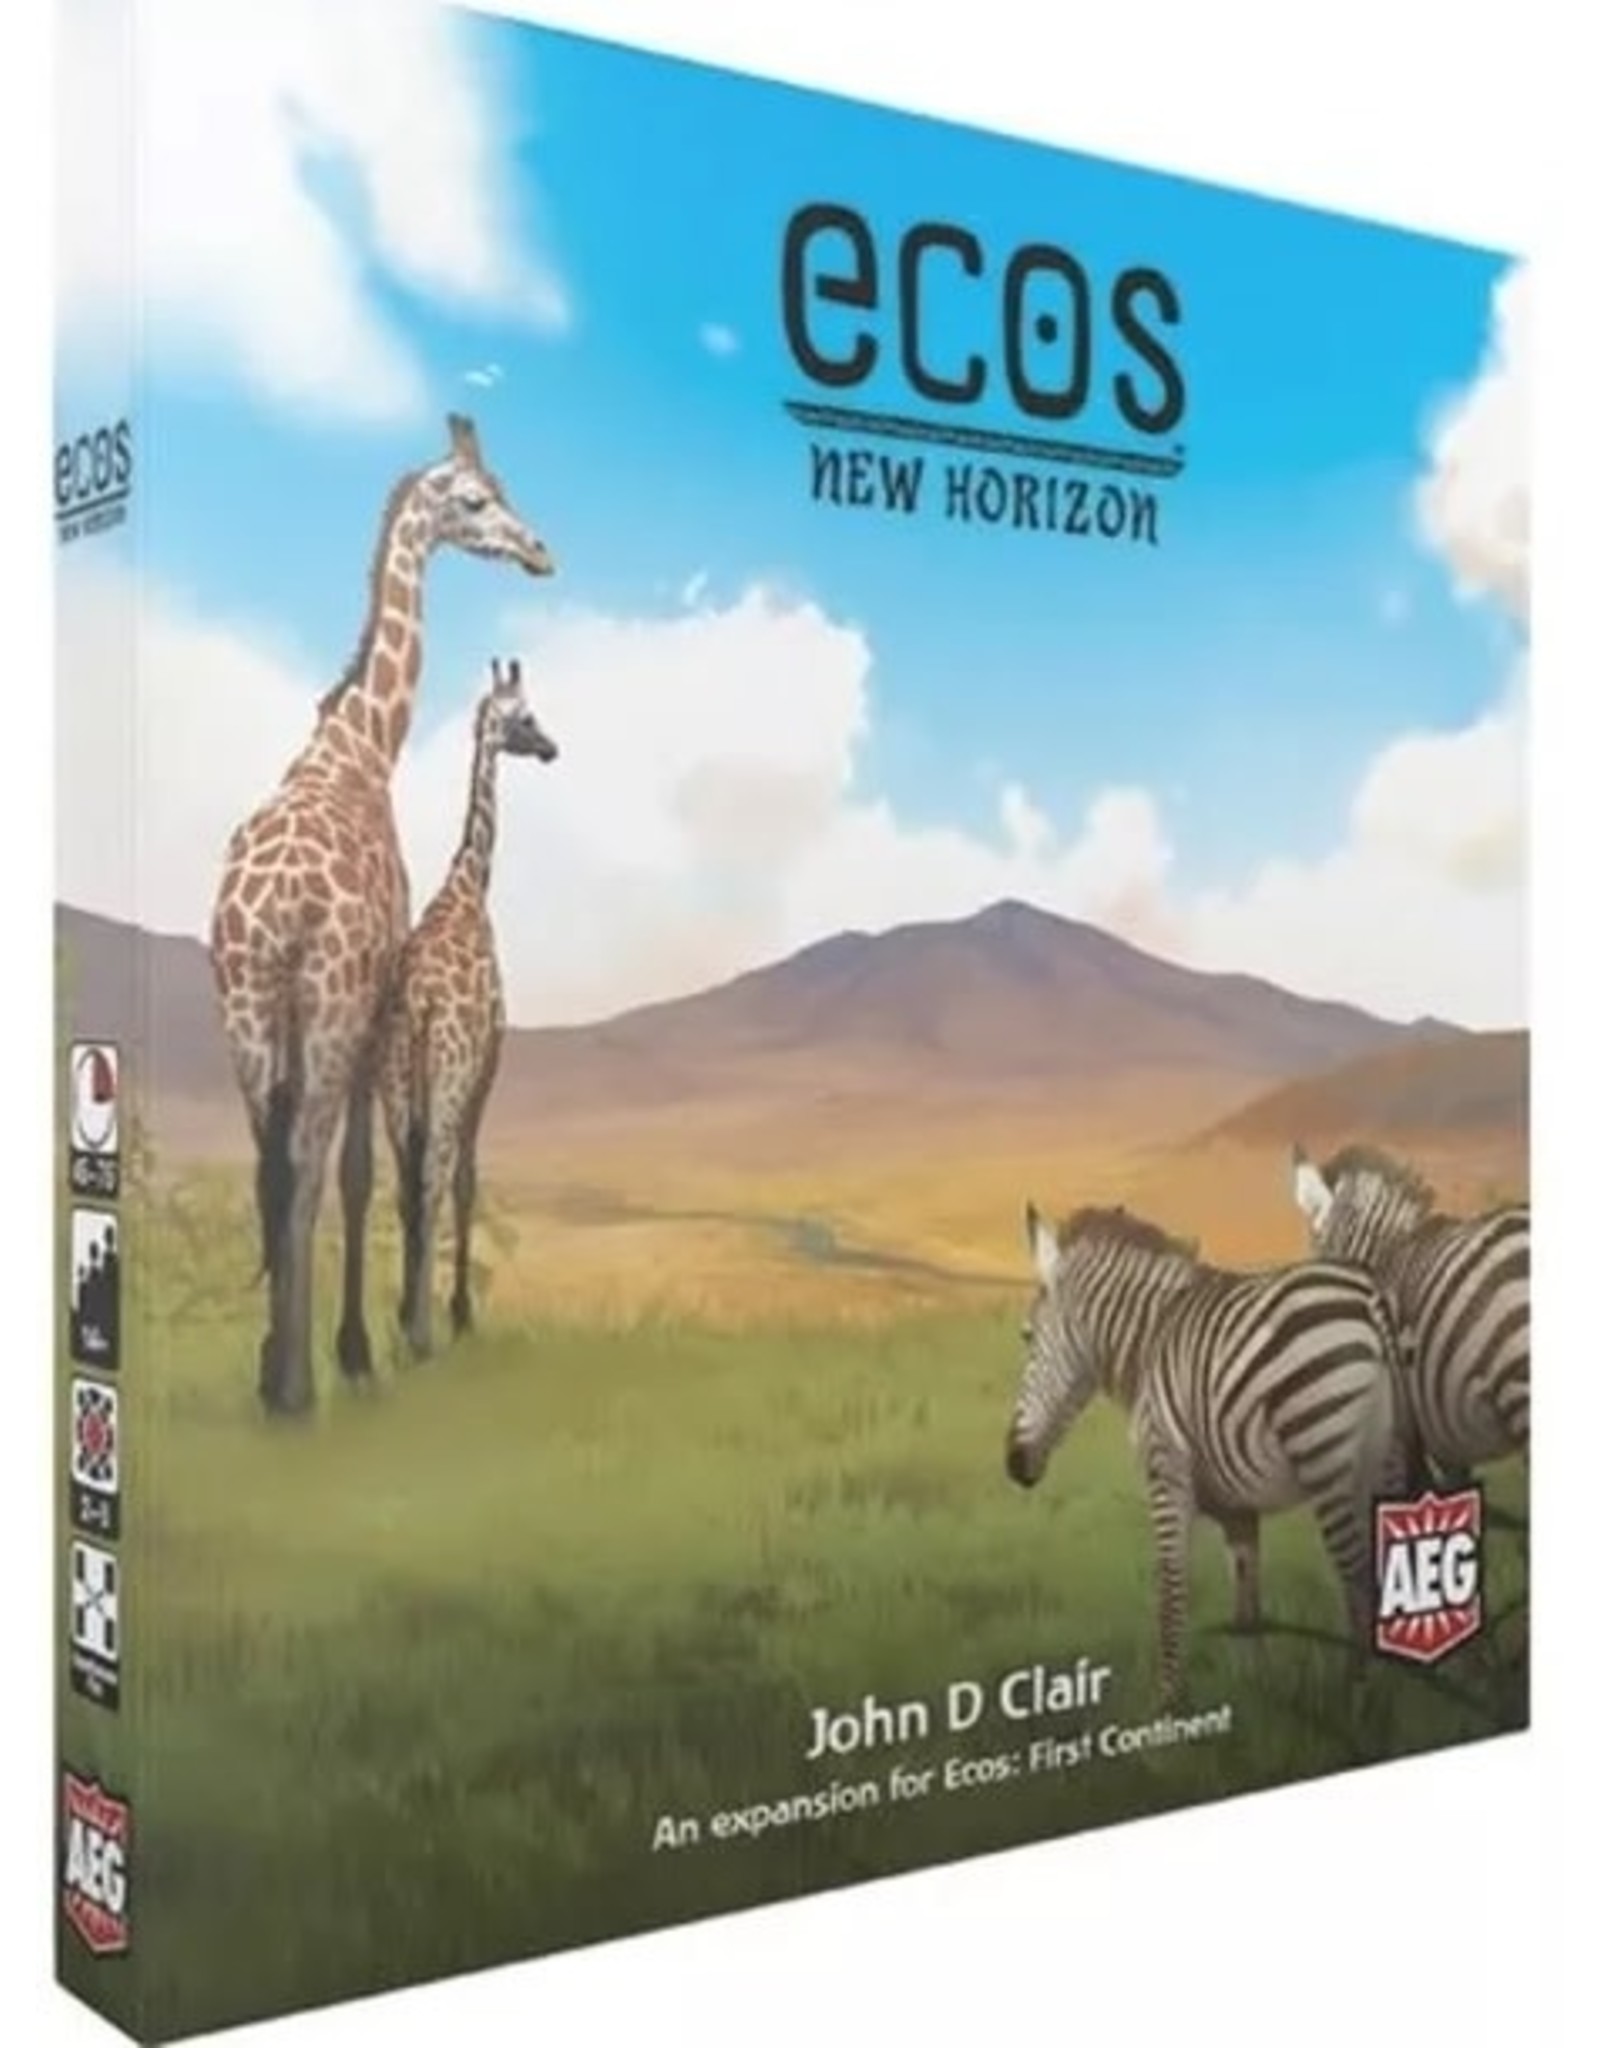 AEG Ecos: New Horizon